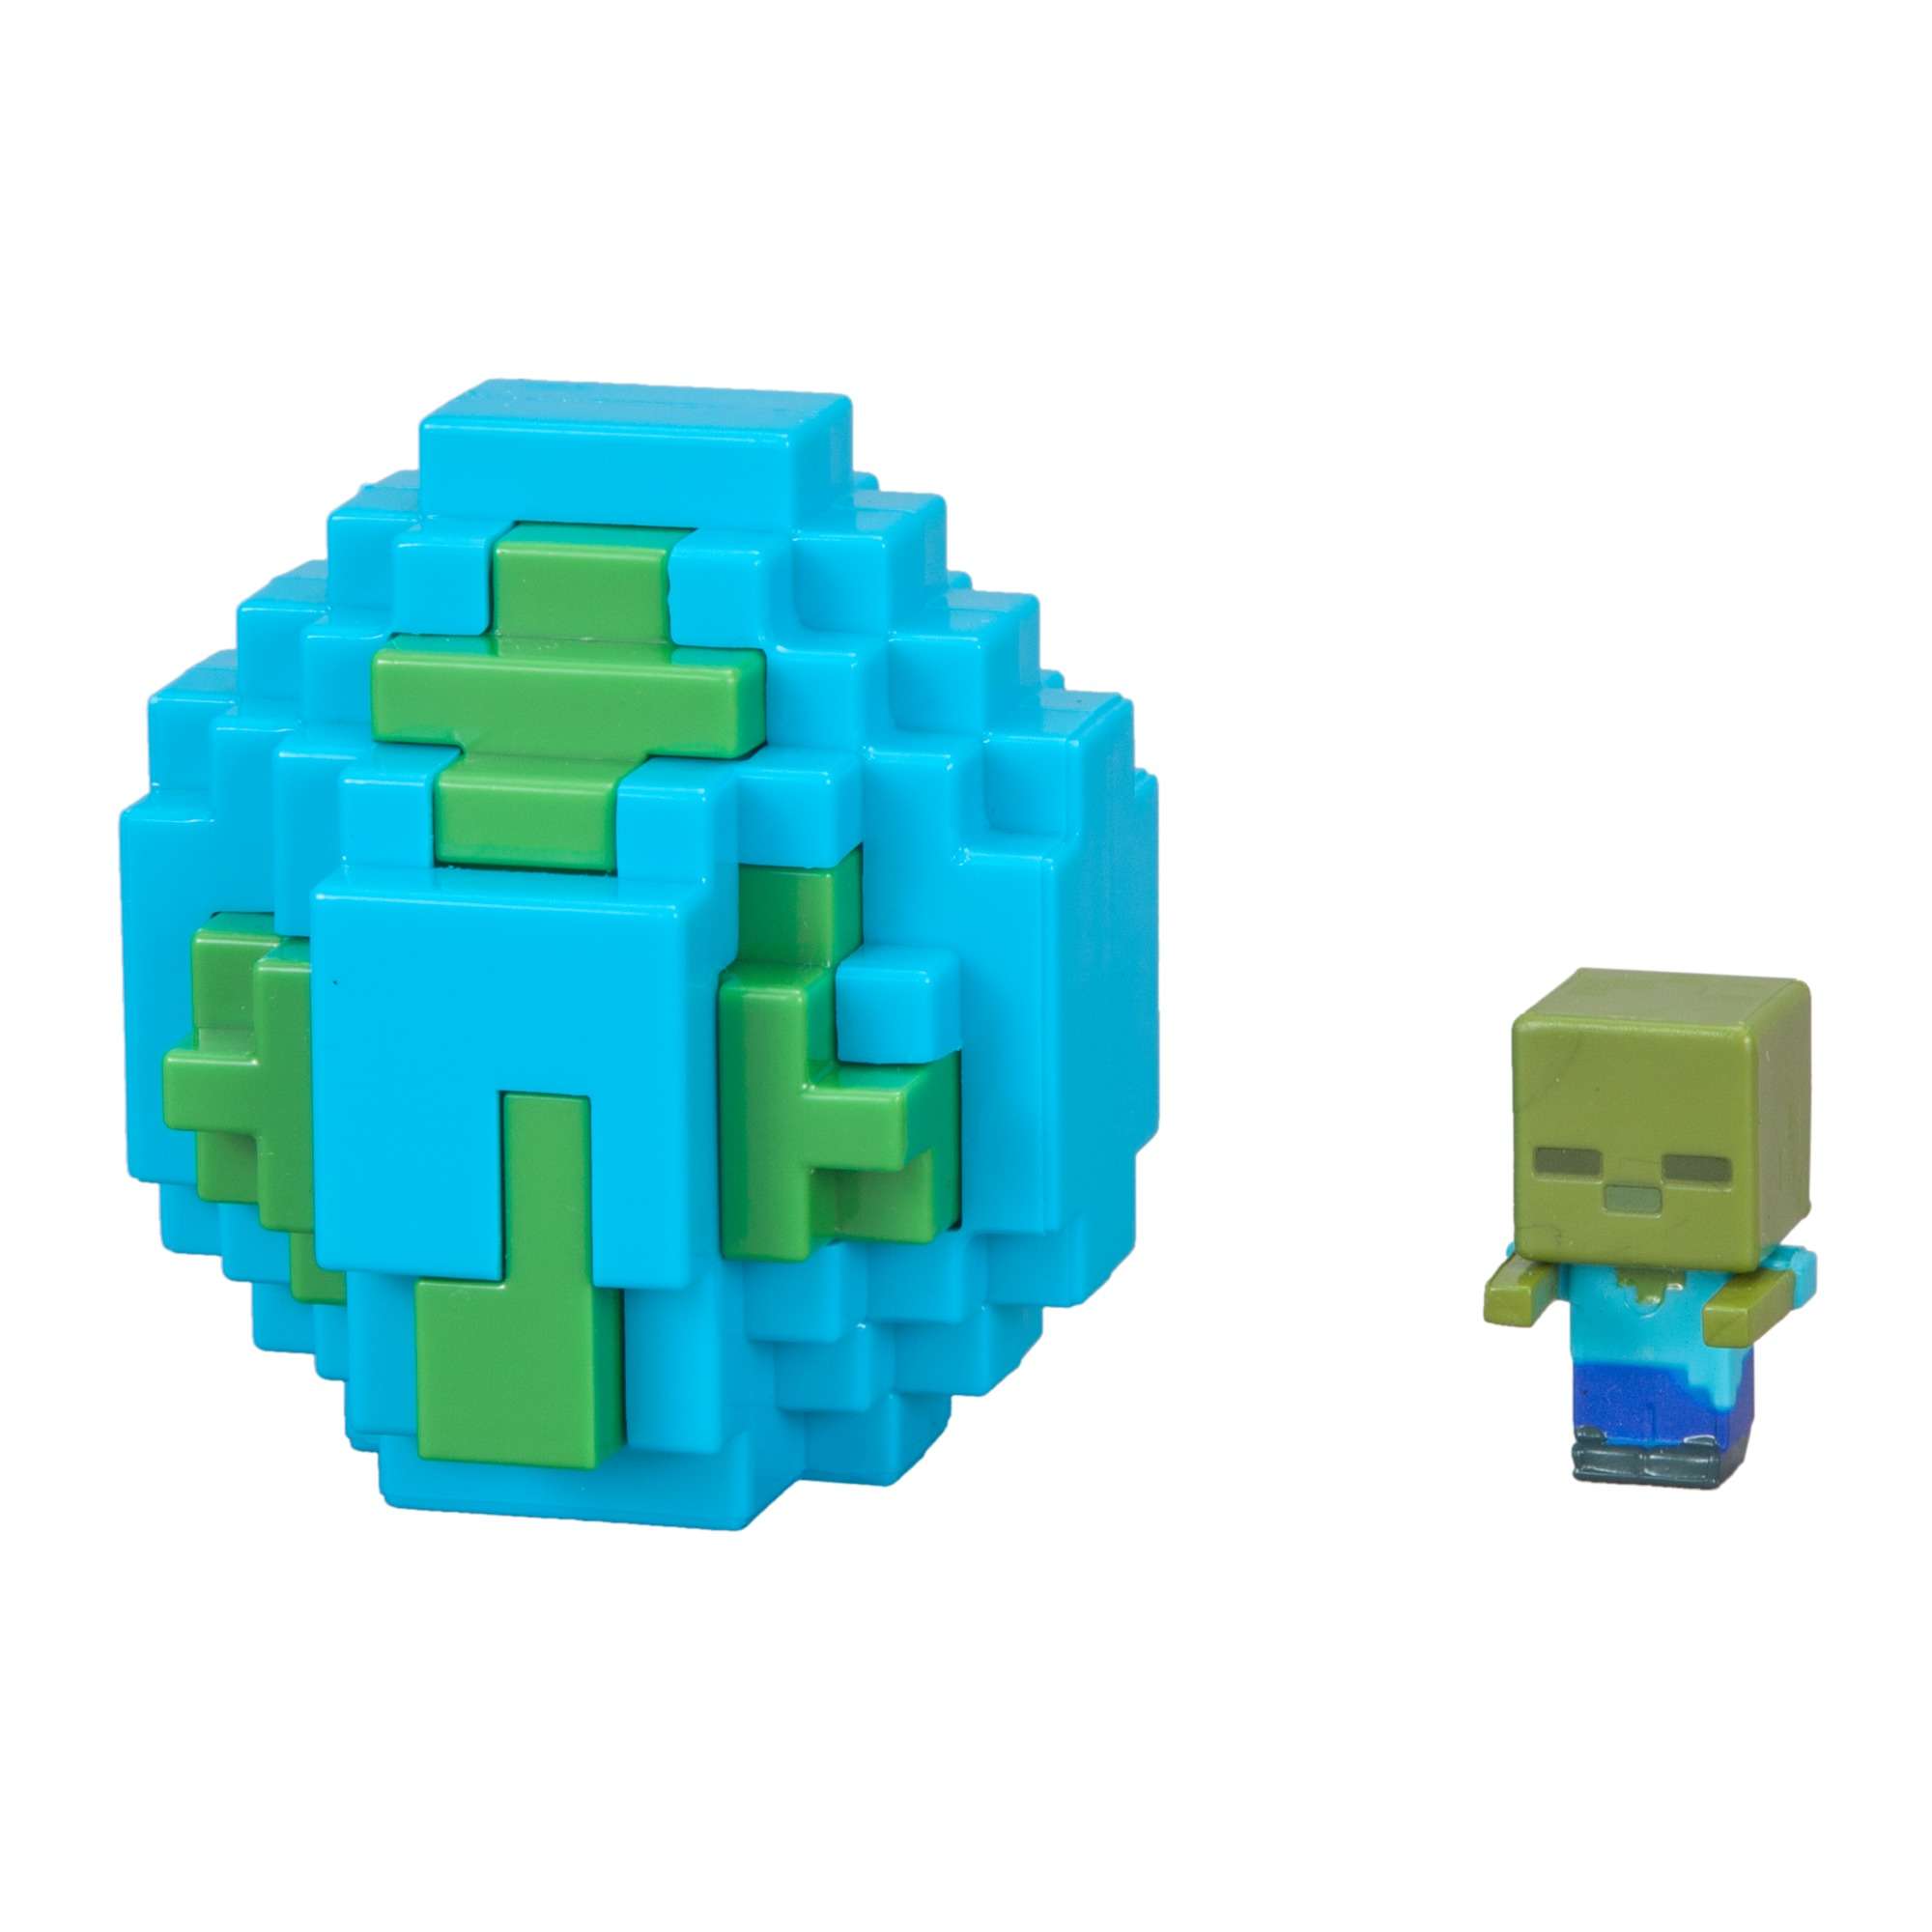 Minecraft ไข่ซ่อนตุ๊กตามายคราฟตัวเล็กไว้ข้างใน Spawn Egg Mini Figure Assortment ของแท้